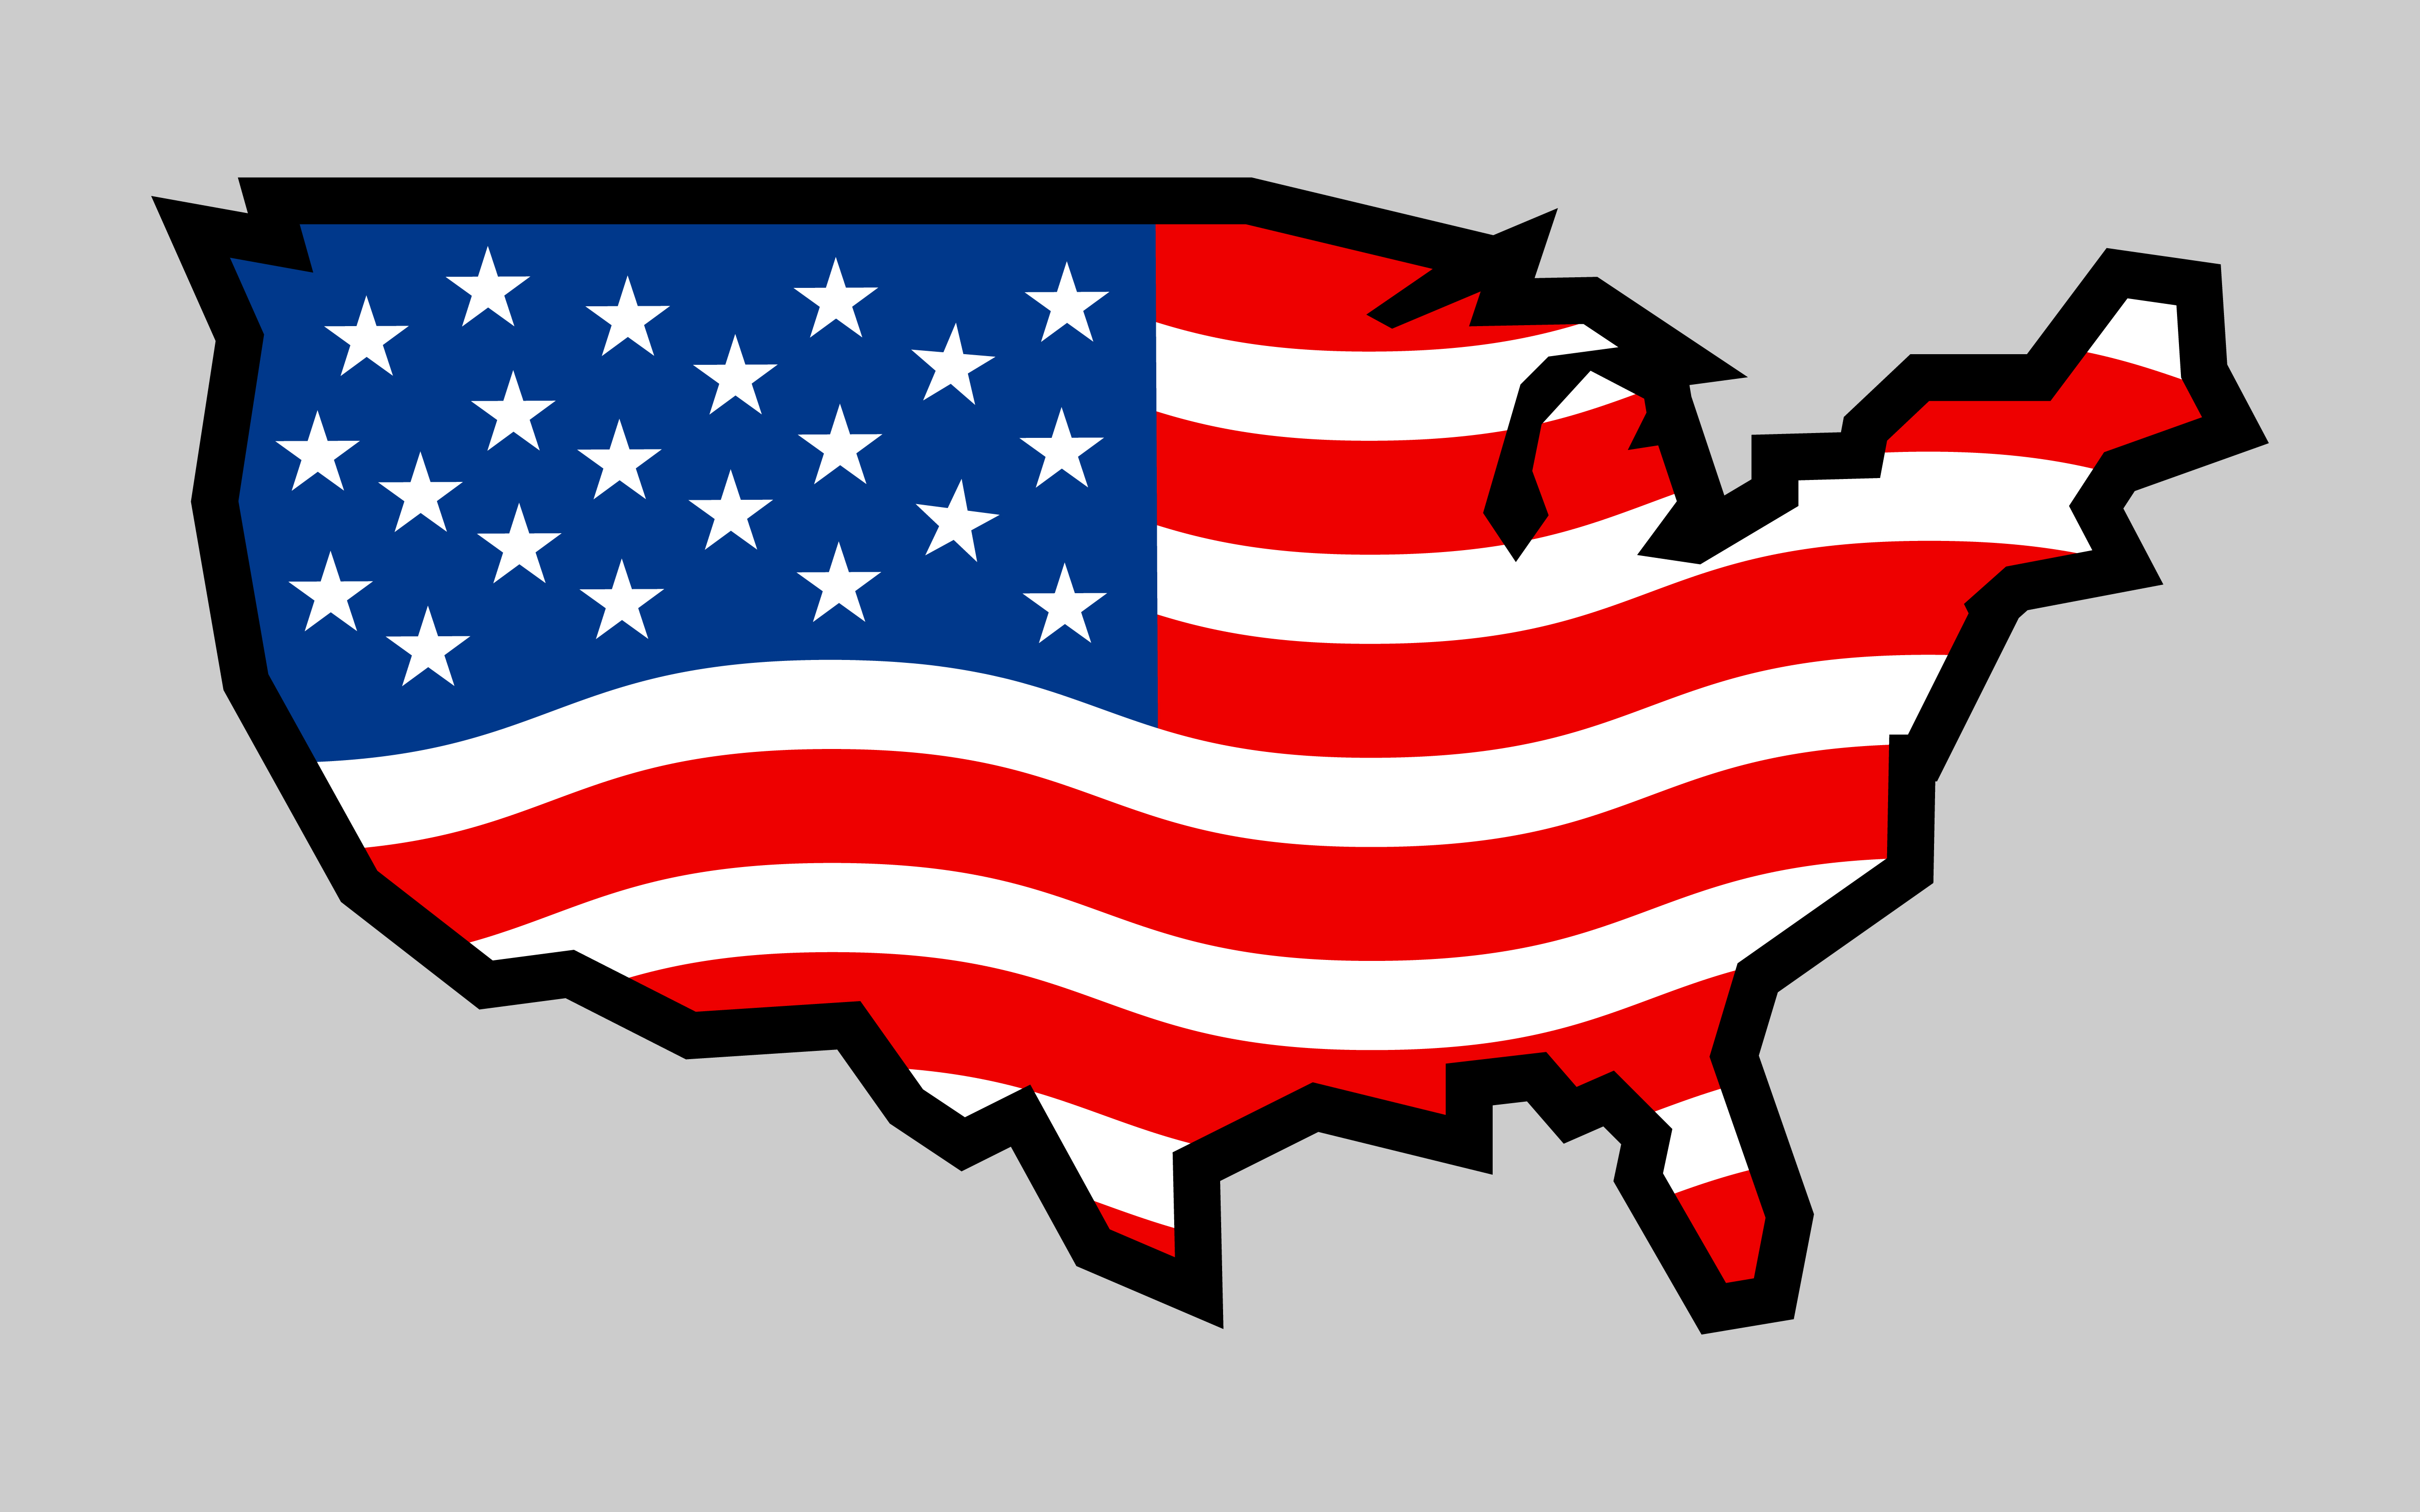 America country flag vector icon - Download Free Vectors ...